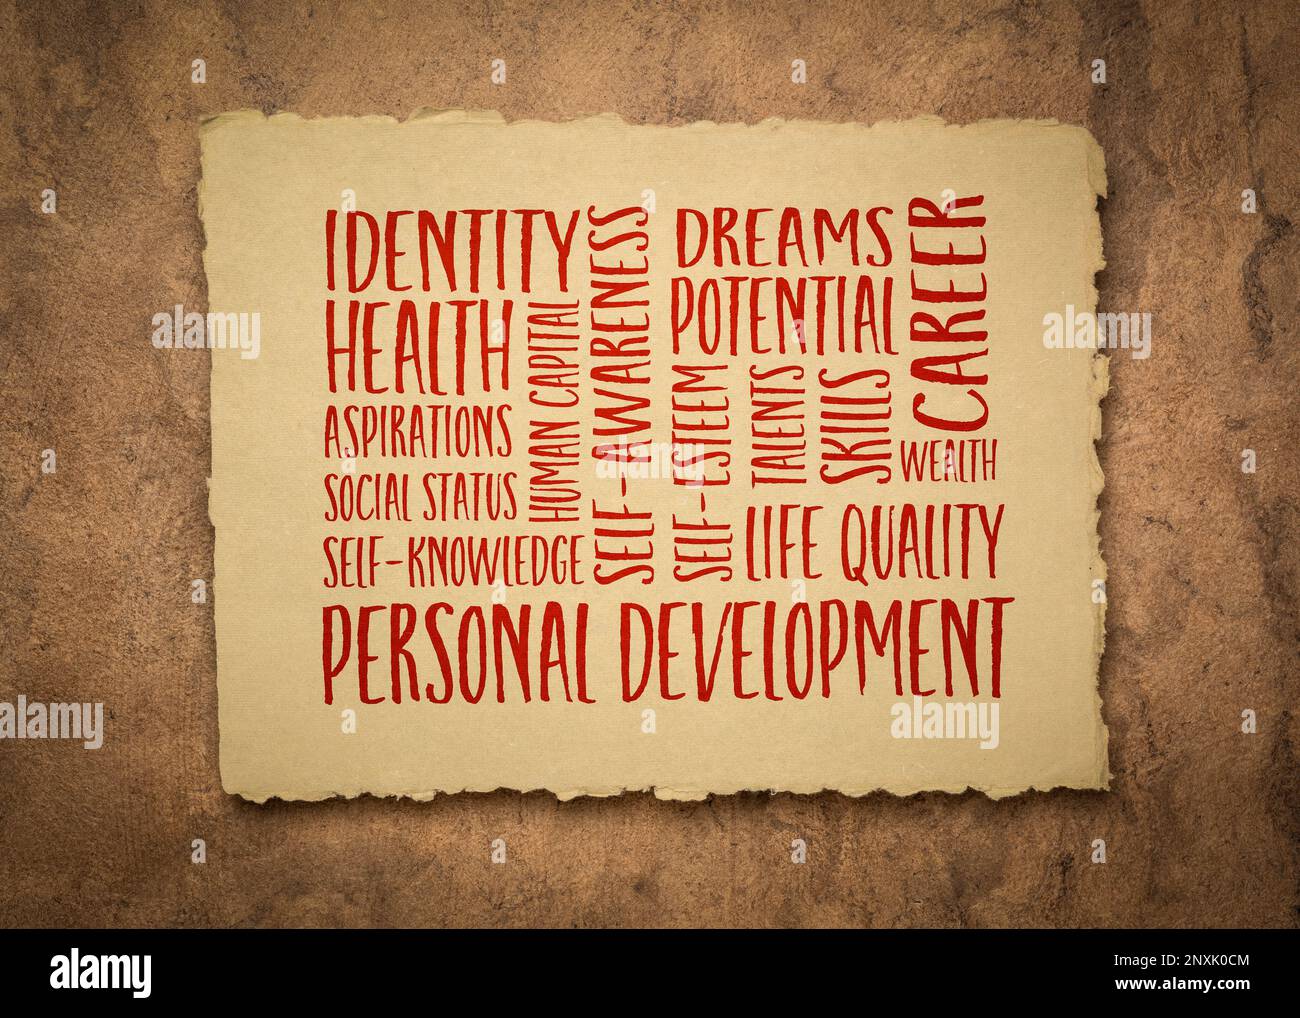 personal development word cloud on an art paper, self improvement concept Stock Photo